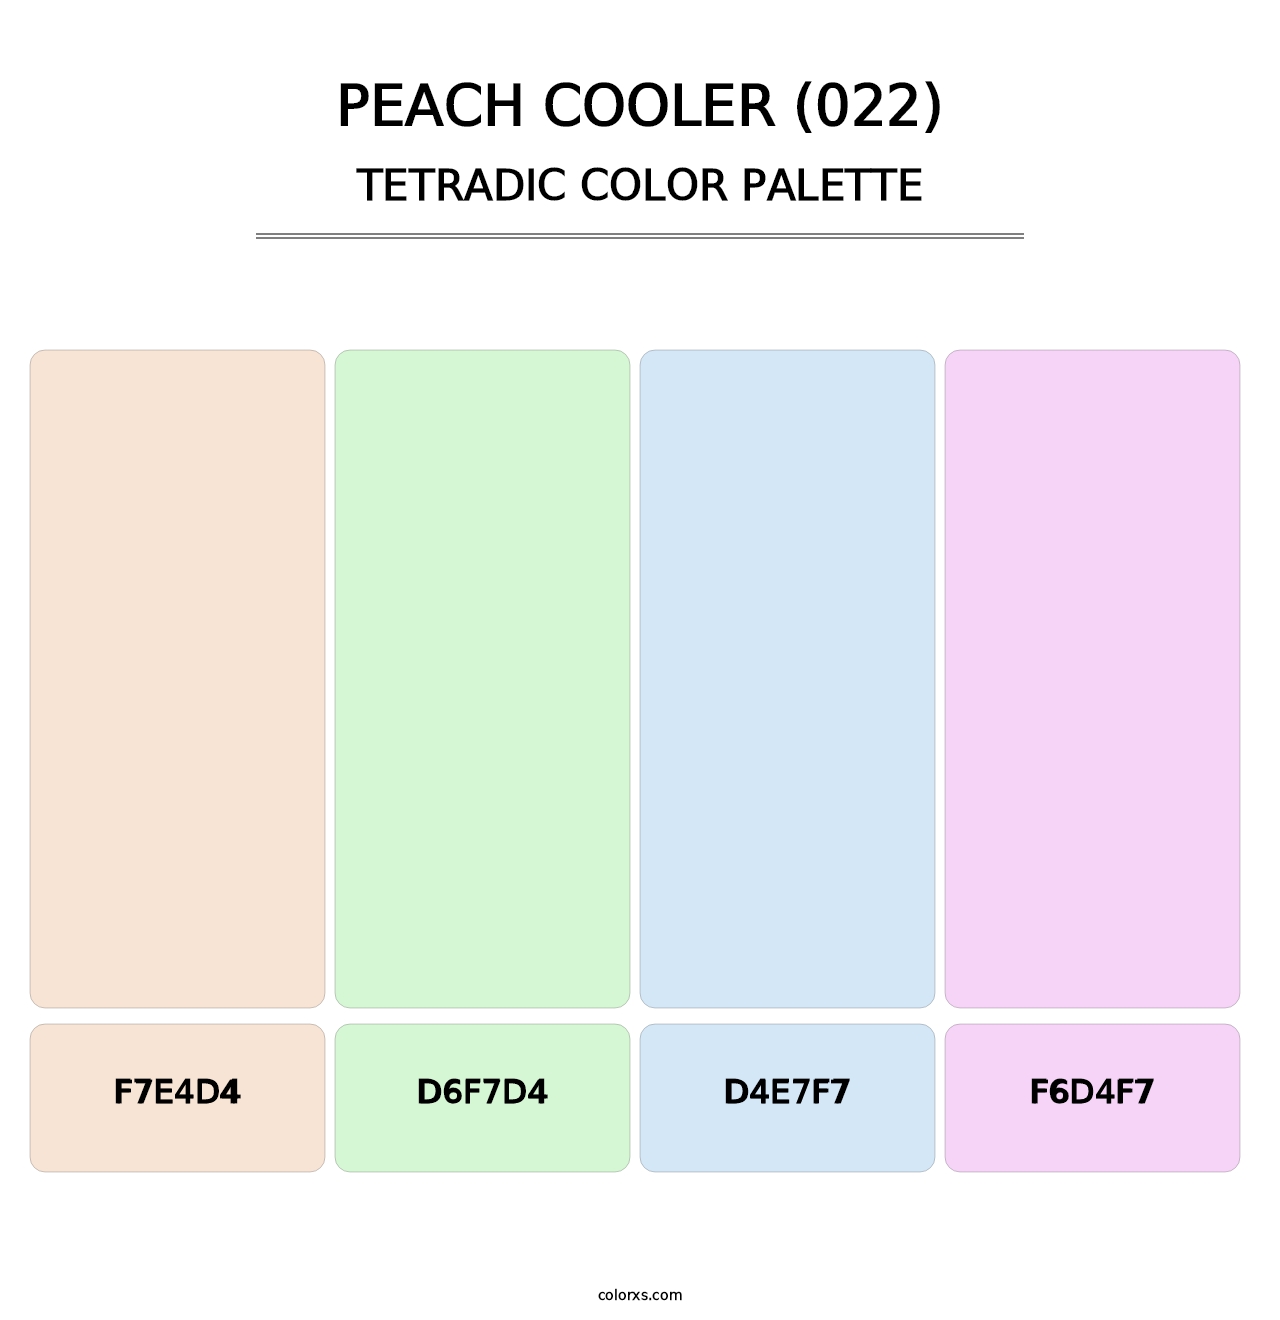 Peach Cooler (022) - Tetradic Color Palette